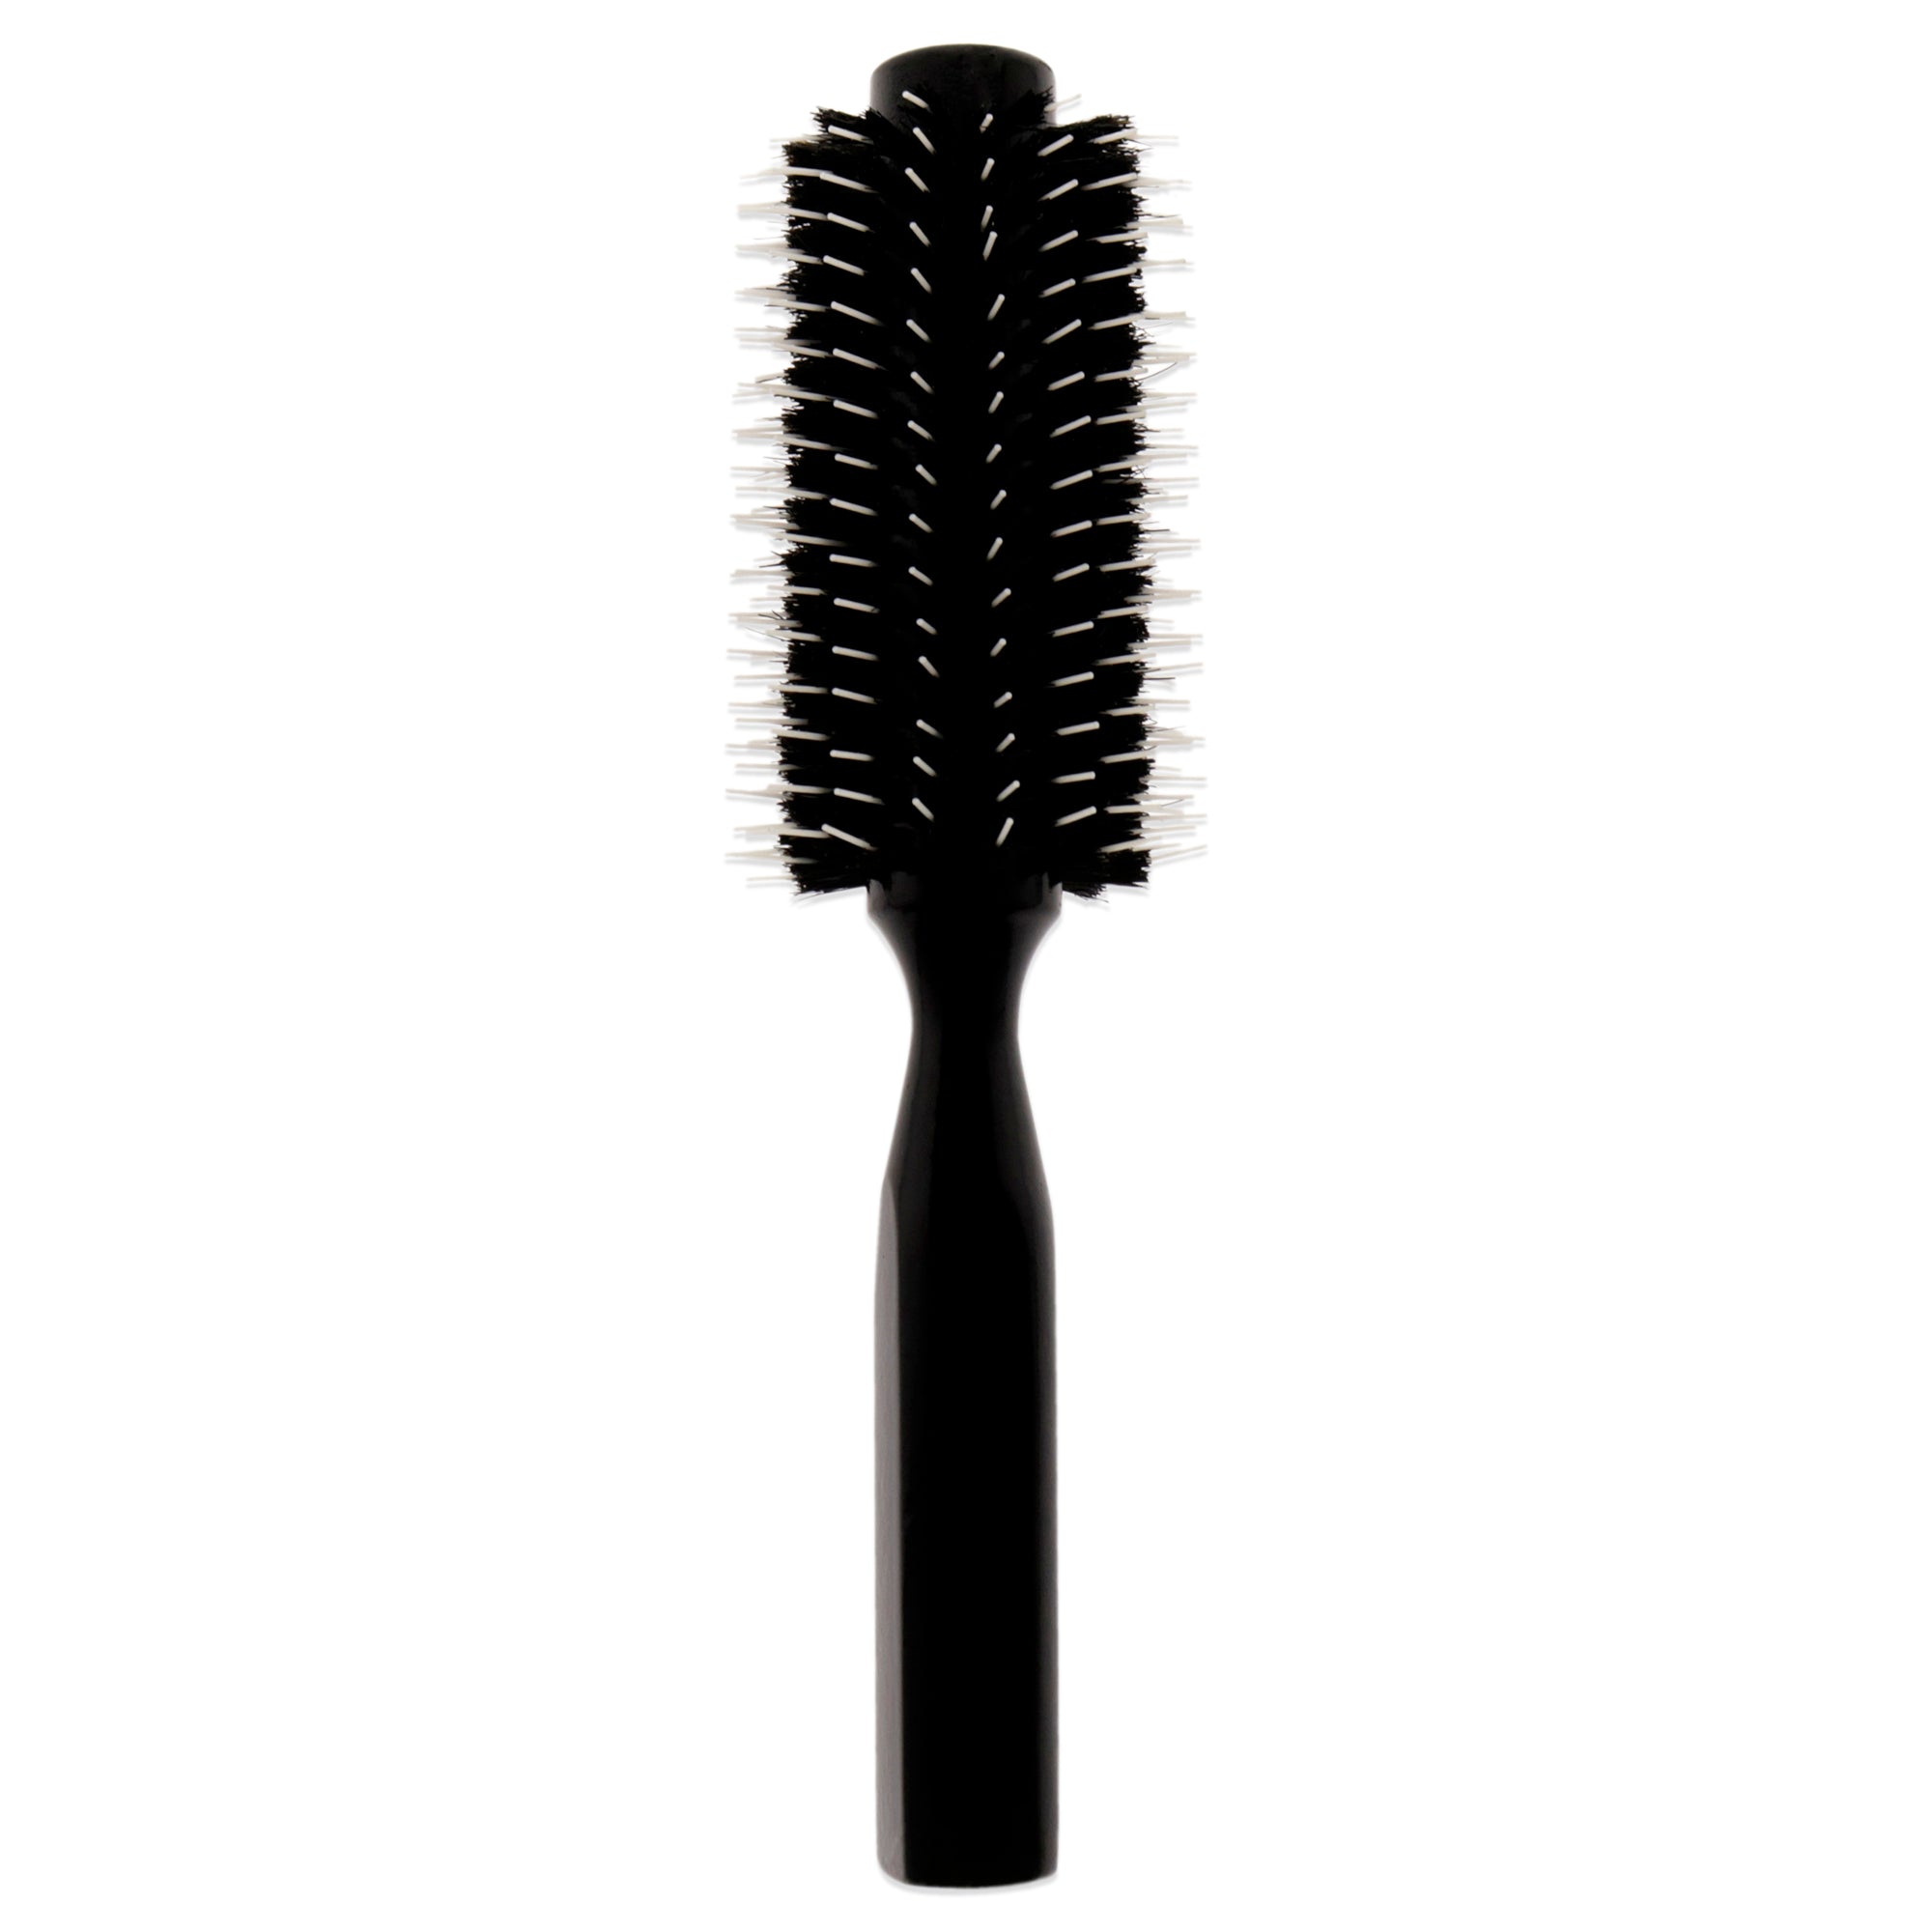 Medium Round Brush-NP by Sally Hershberger for Unisex - 1 Pc Hair Brush